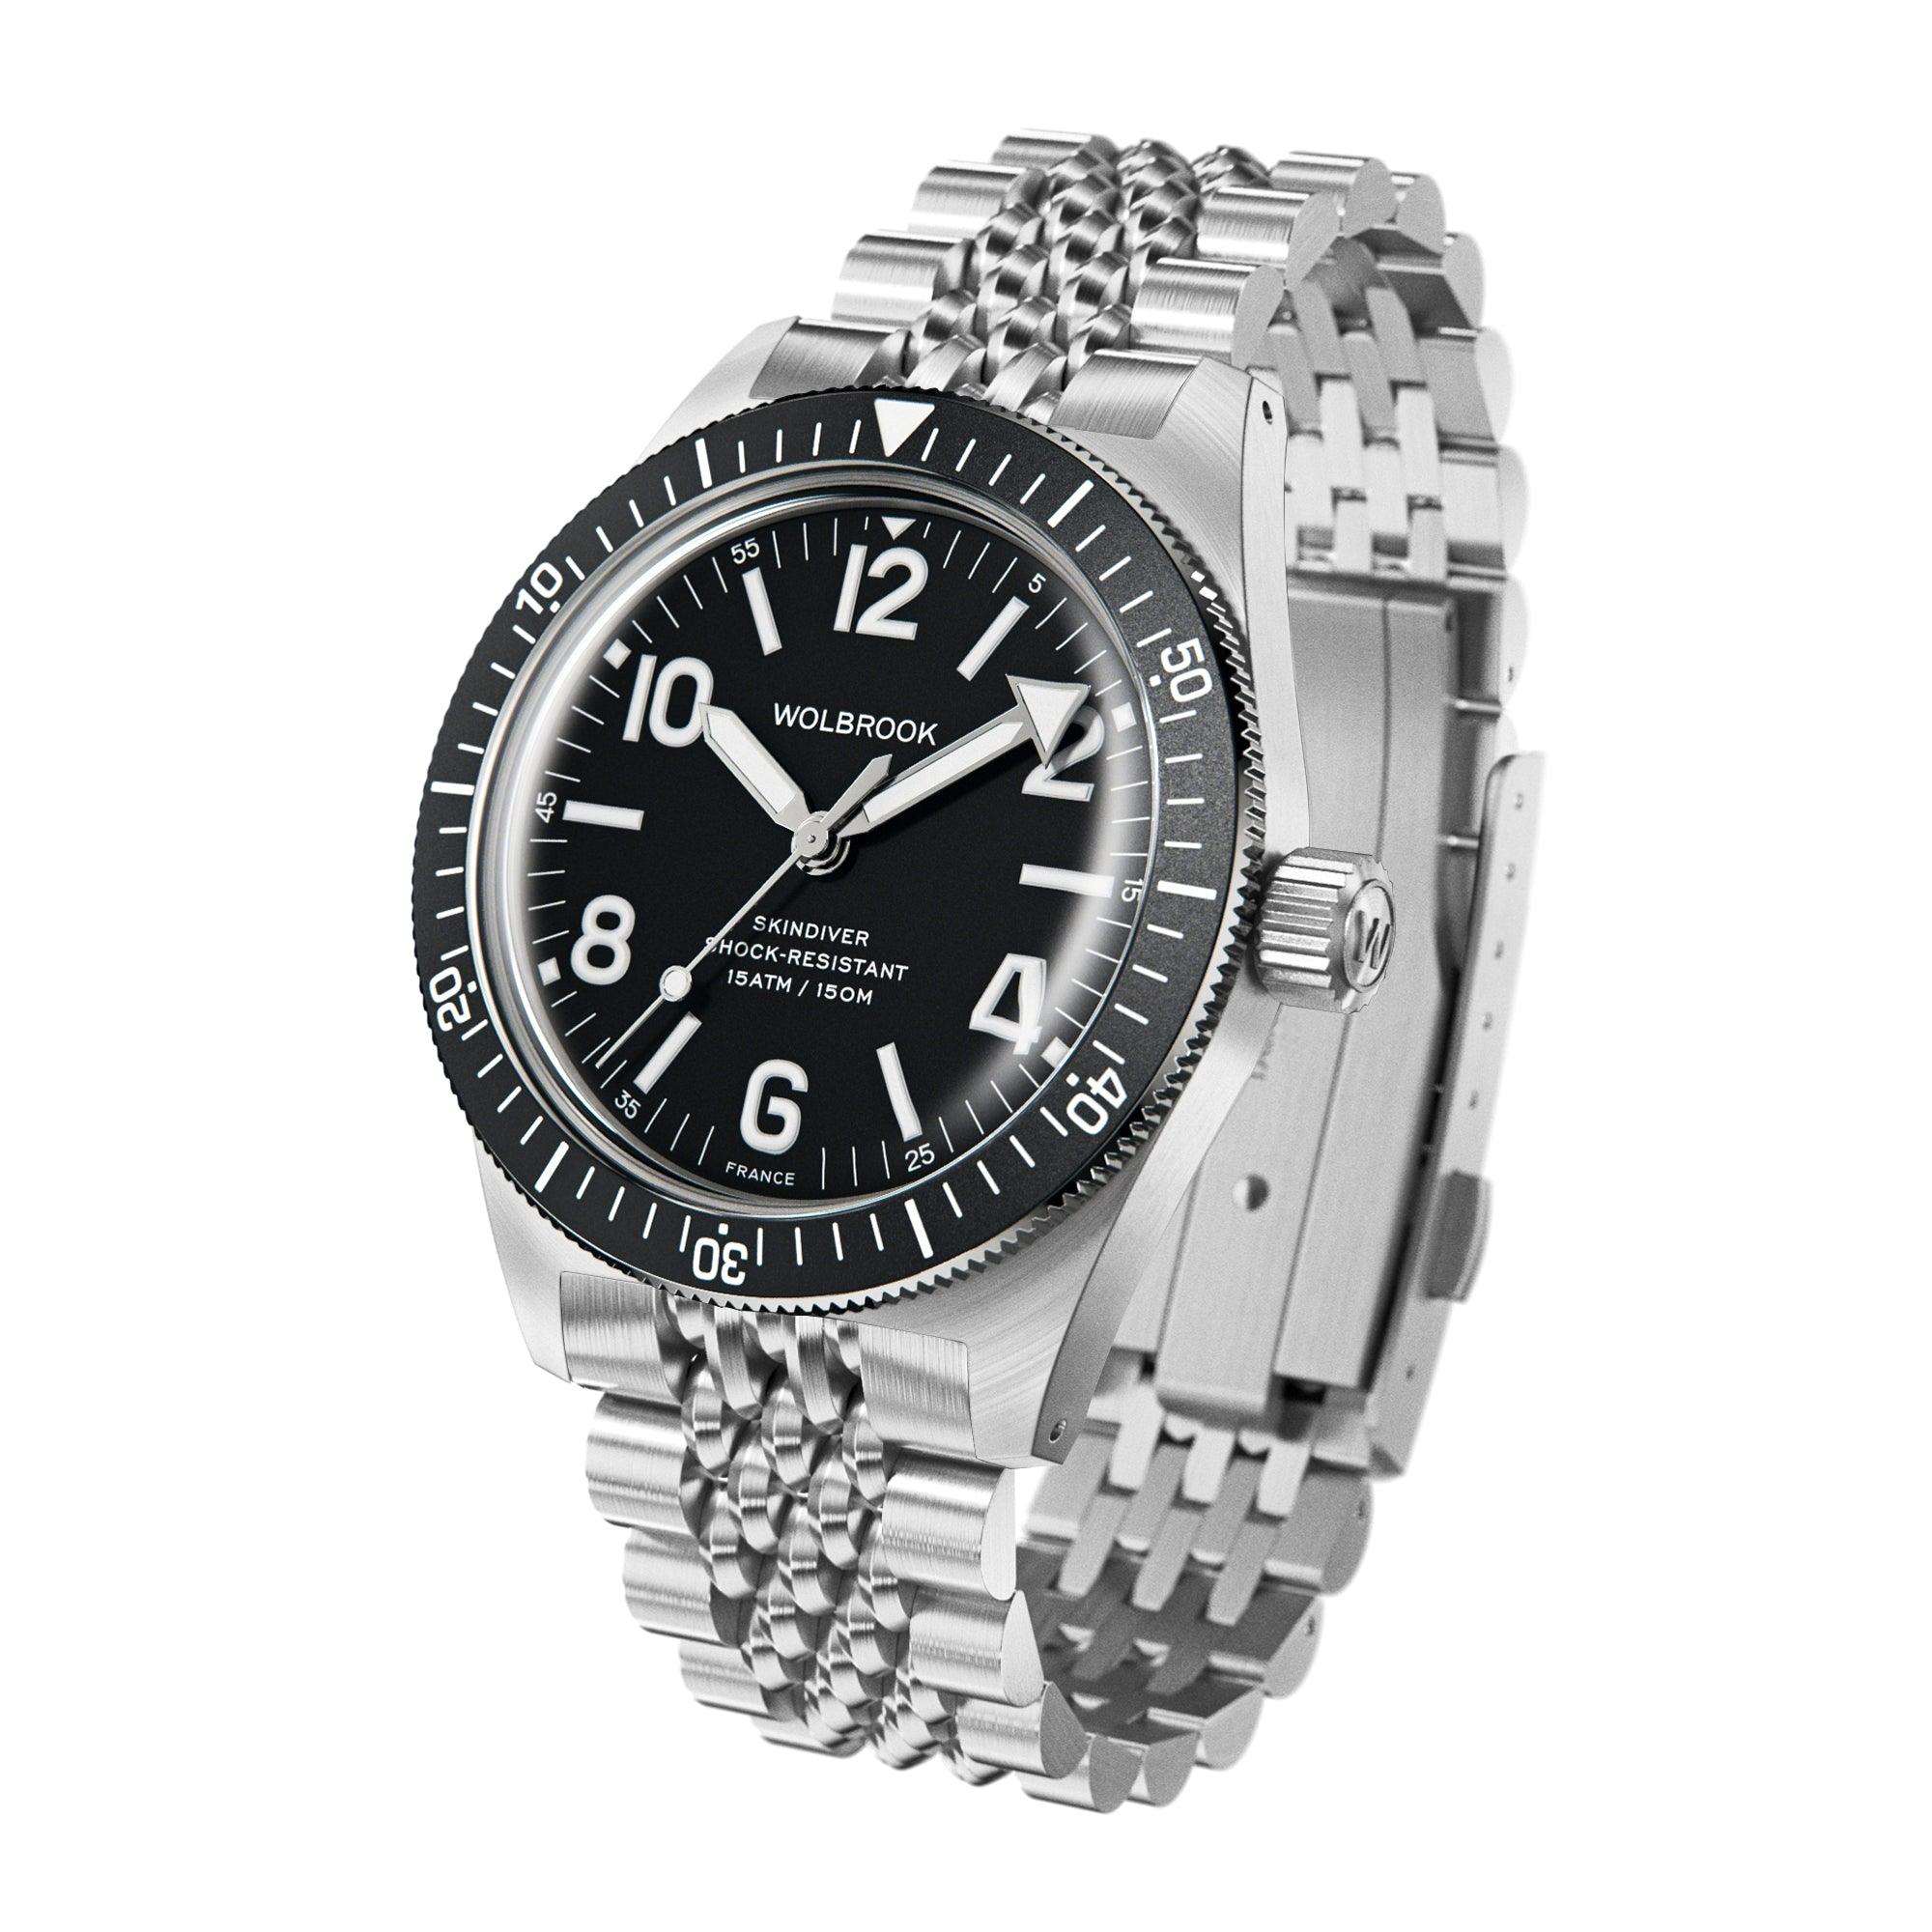 Skindiver Automatic Bracelet Watch – Black Dial